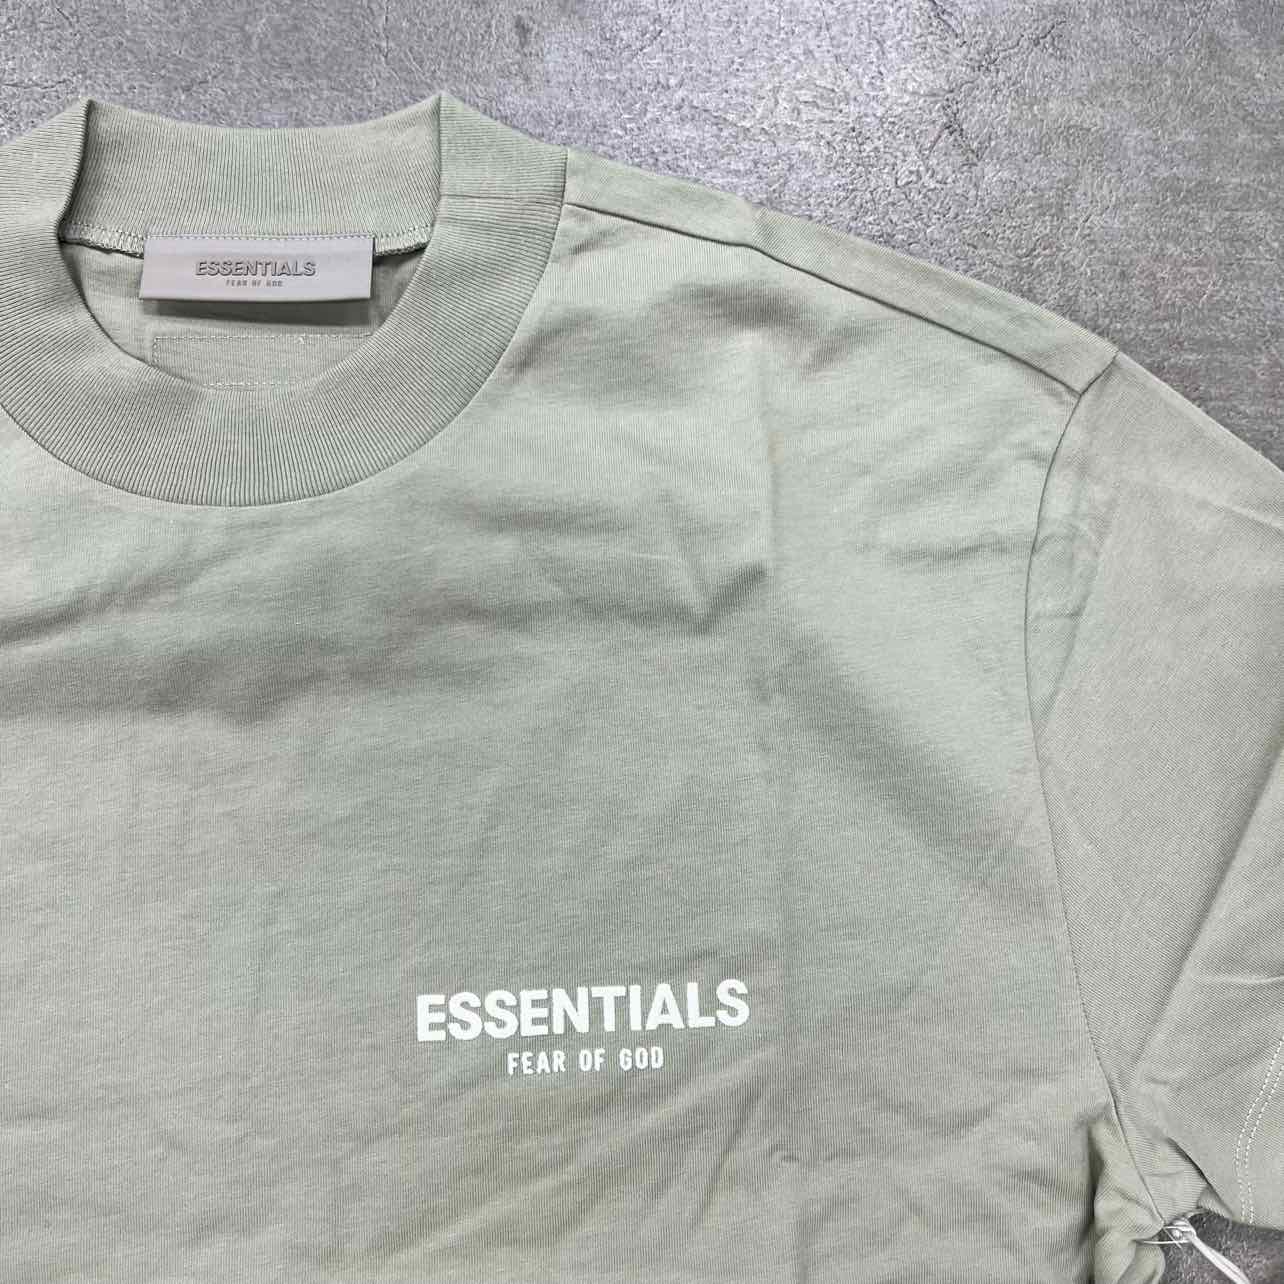 Fear of God T-Shirt "ESSENTIALS" Seafoam New Size S